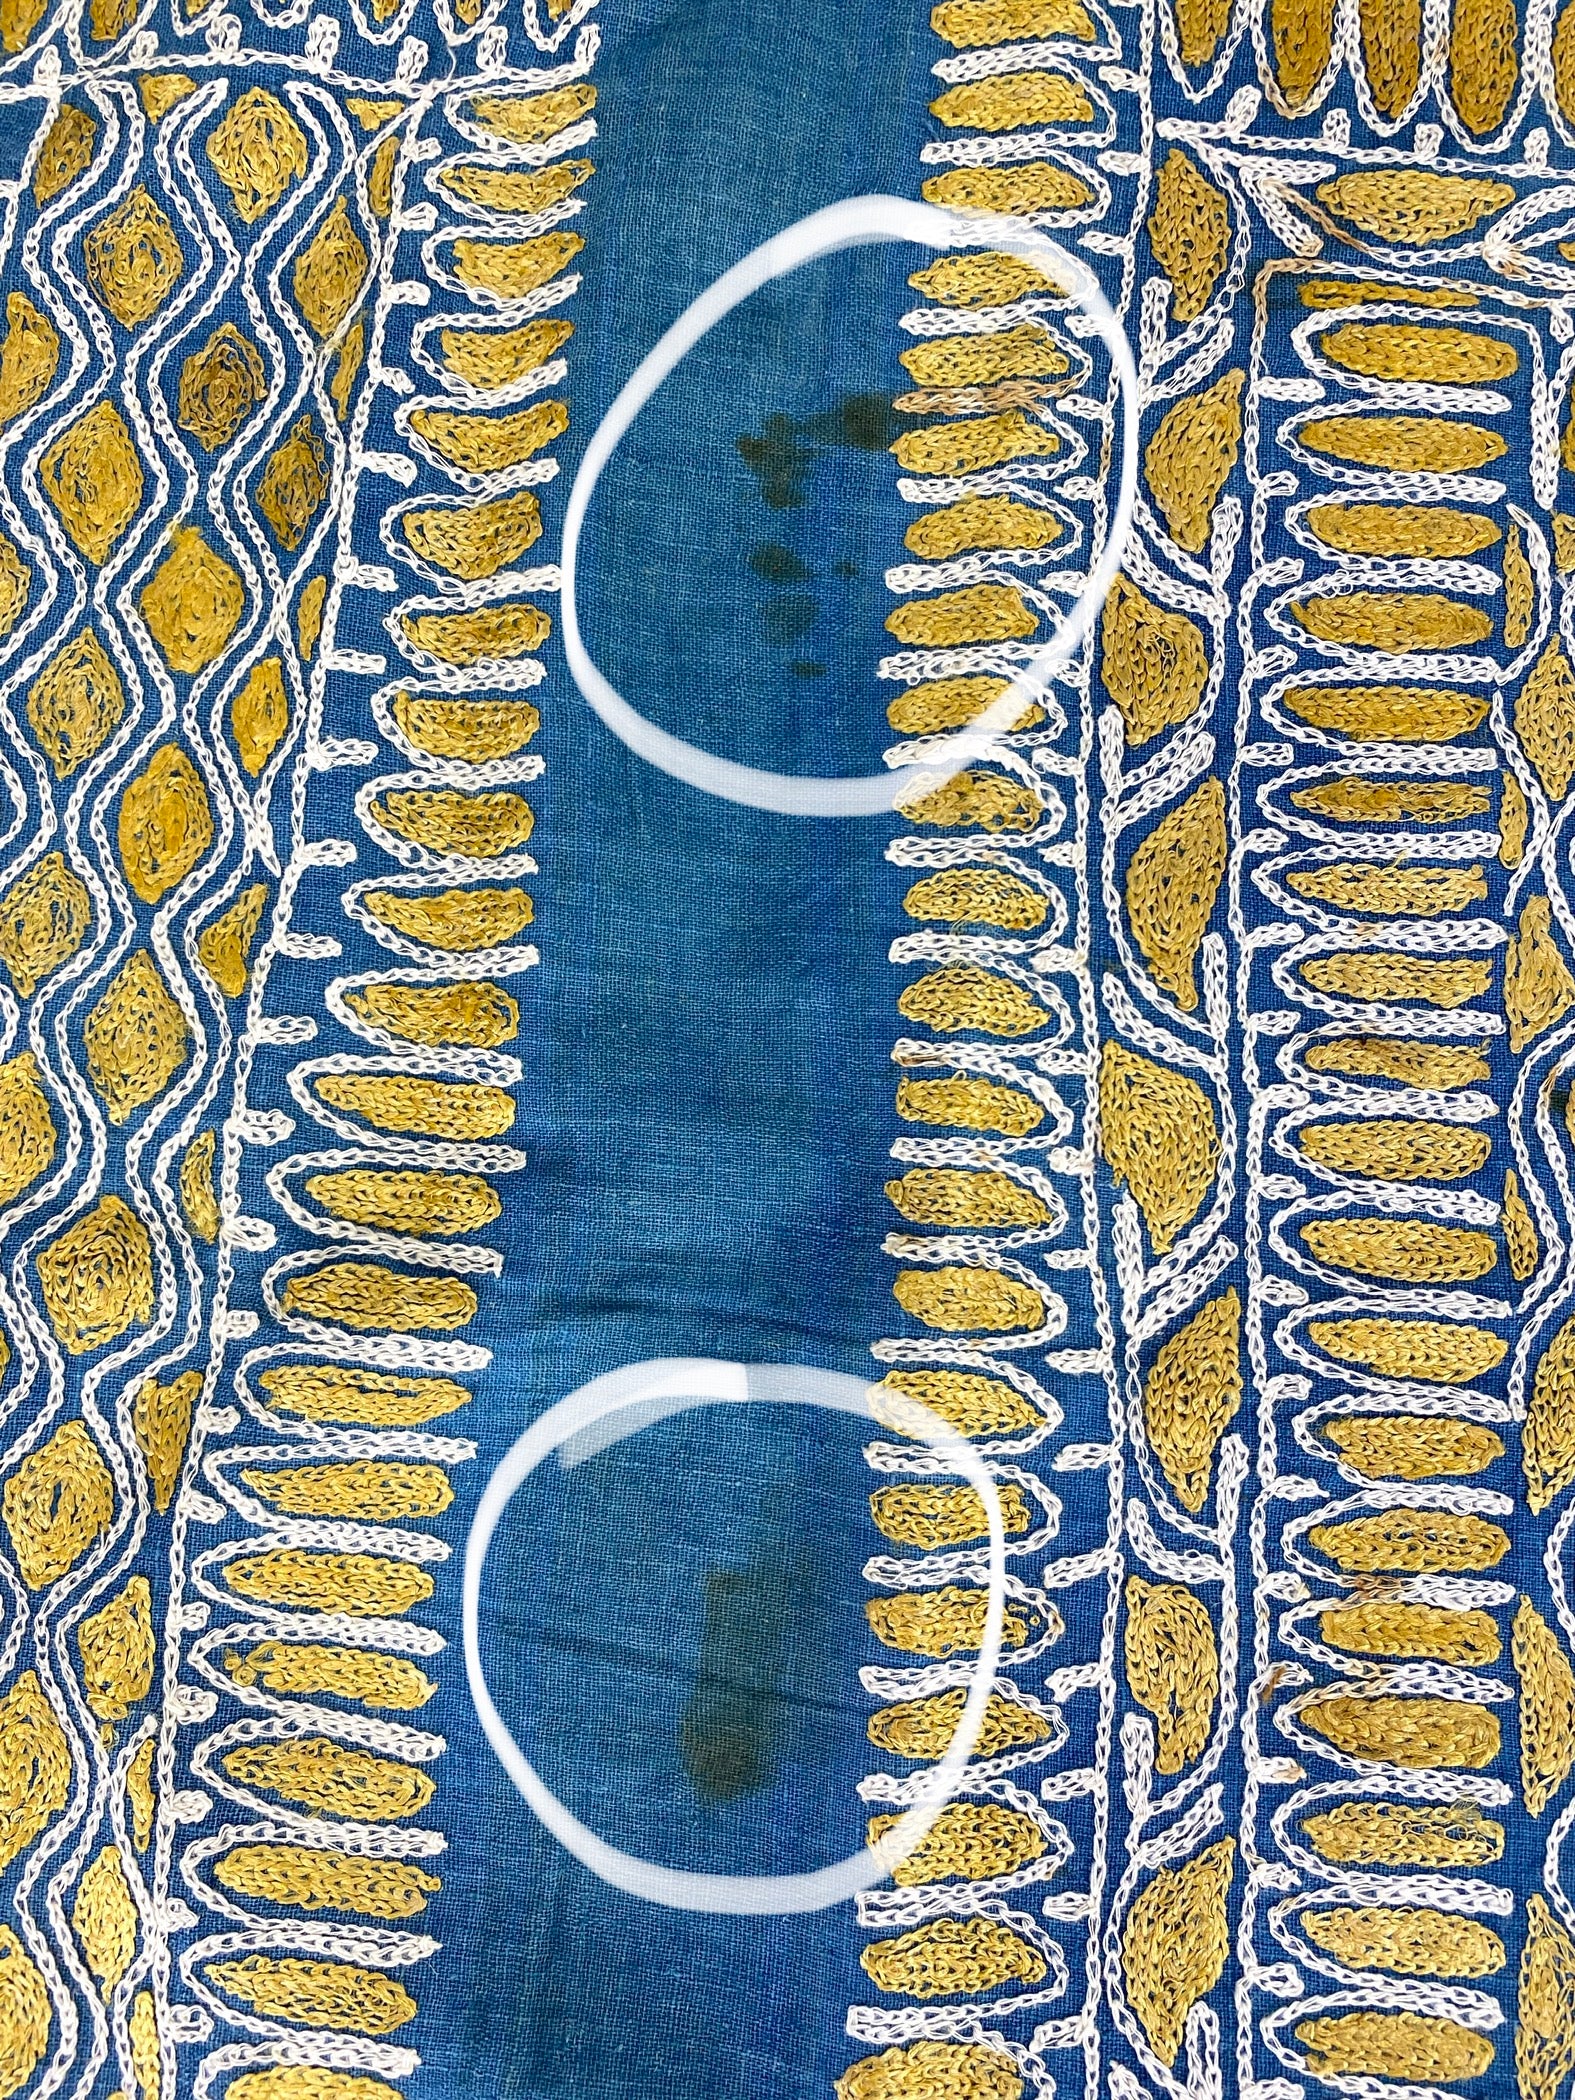 Vintage 60s/70s Mod Circle Print Terry Cloth Cotton Fabric, 4+ yrd